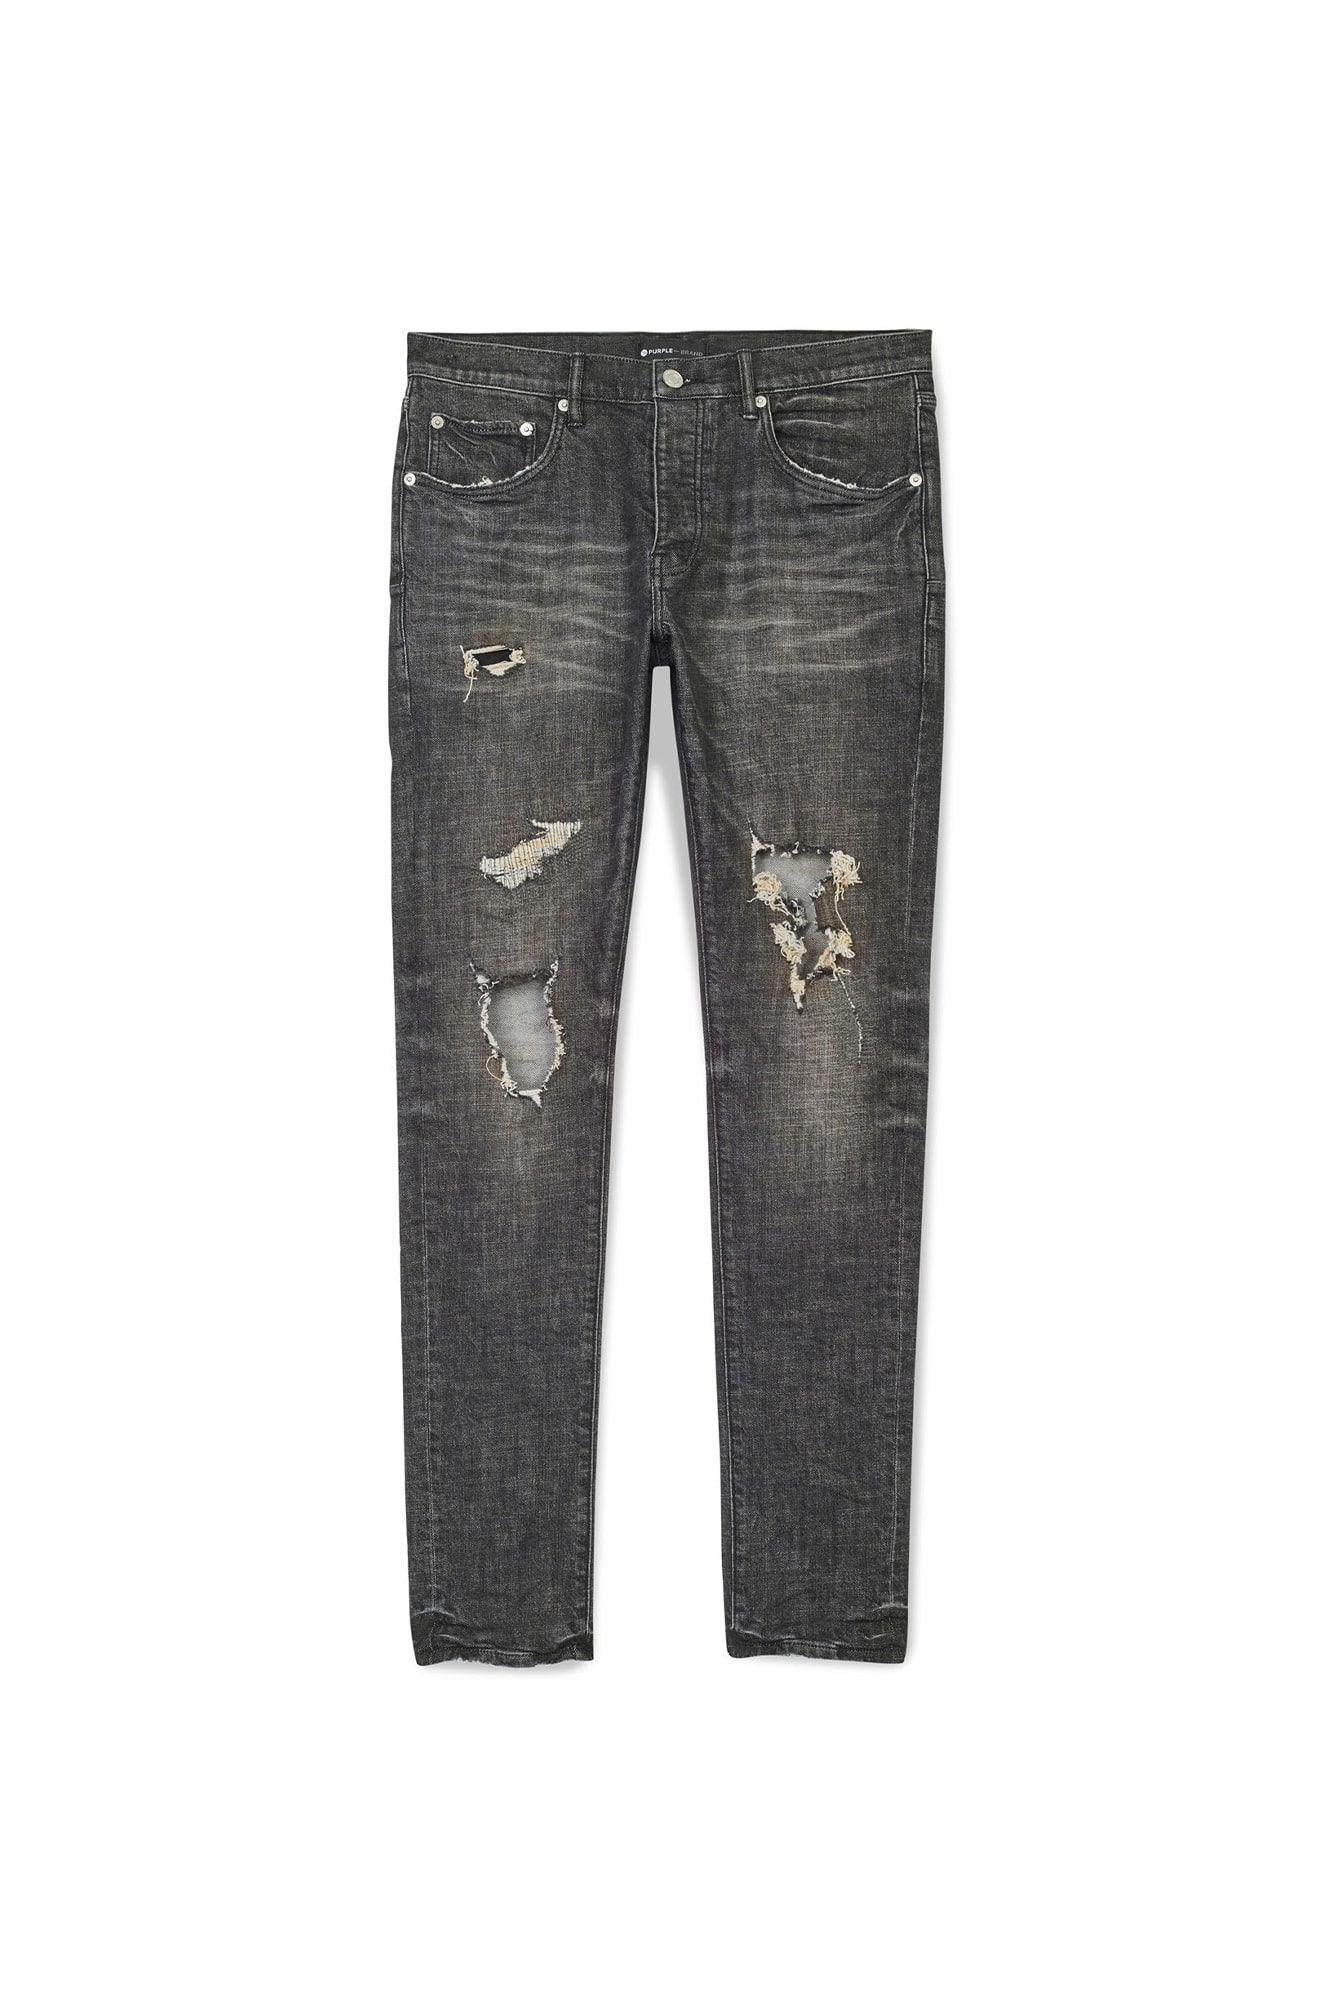 PURPLE BRAND - Men's Denim Jean - Low Rise Skinny - Style No. P001 - Exclusive Grey Wash Distress - Front